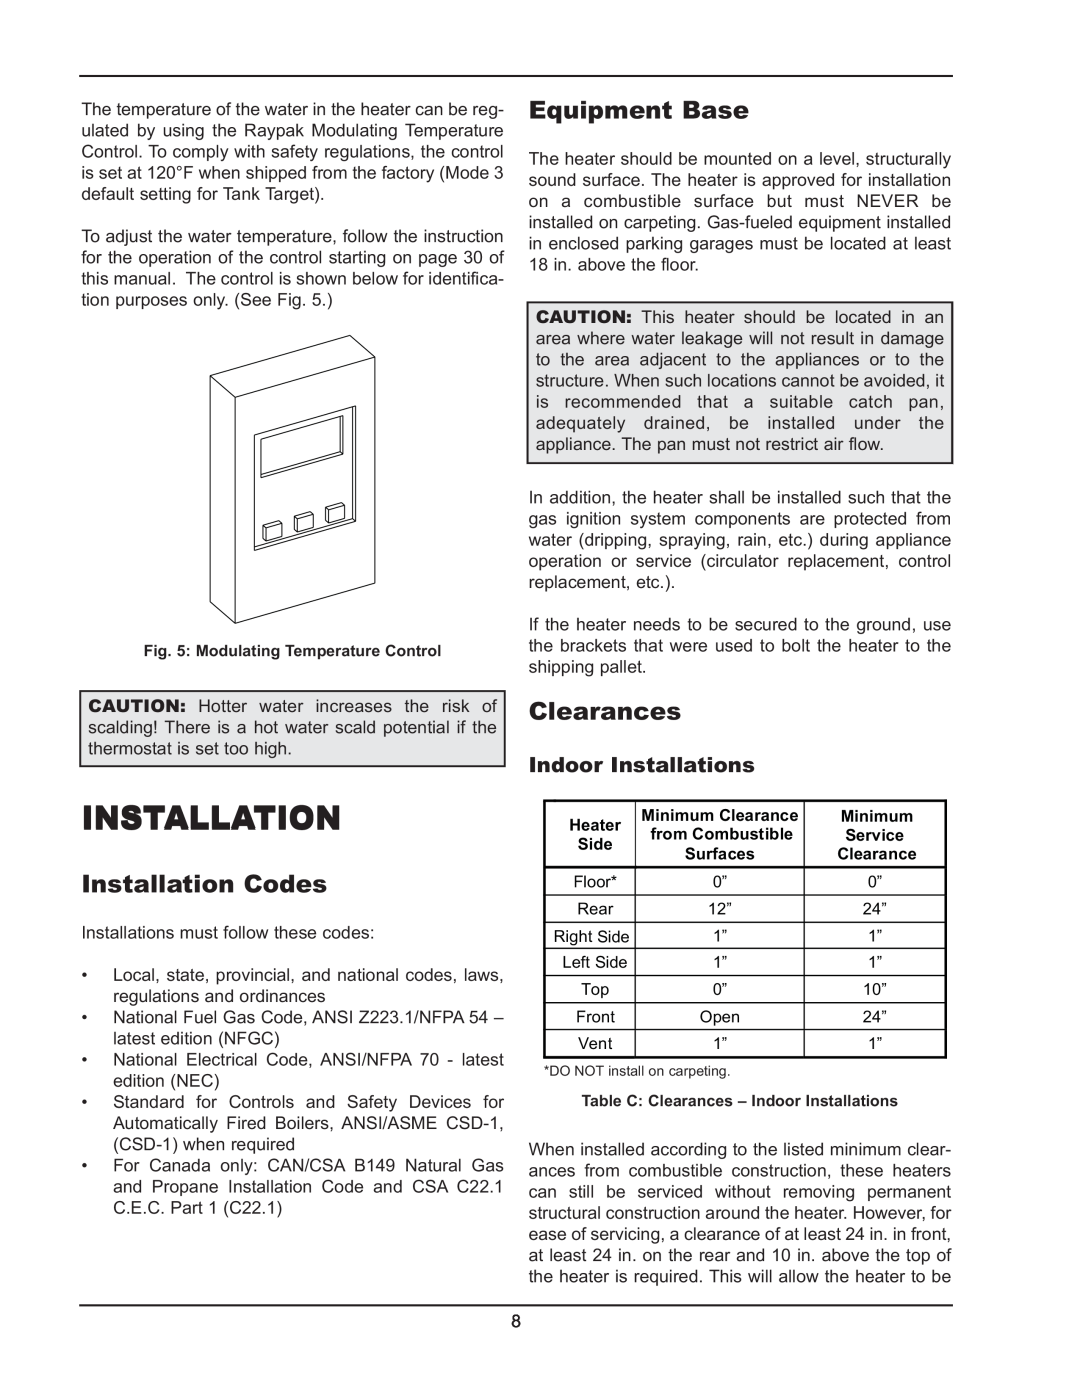 Raypak 503-2003 manual Installation Codes, Equipment Base, Clearances 